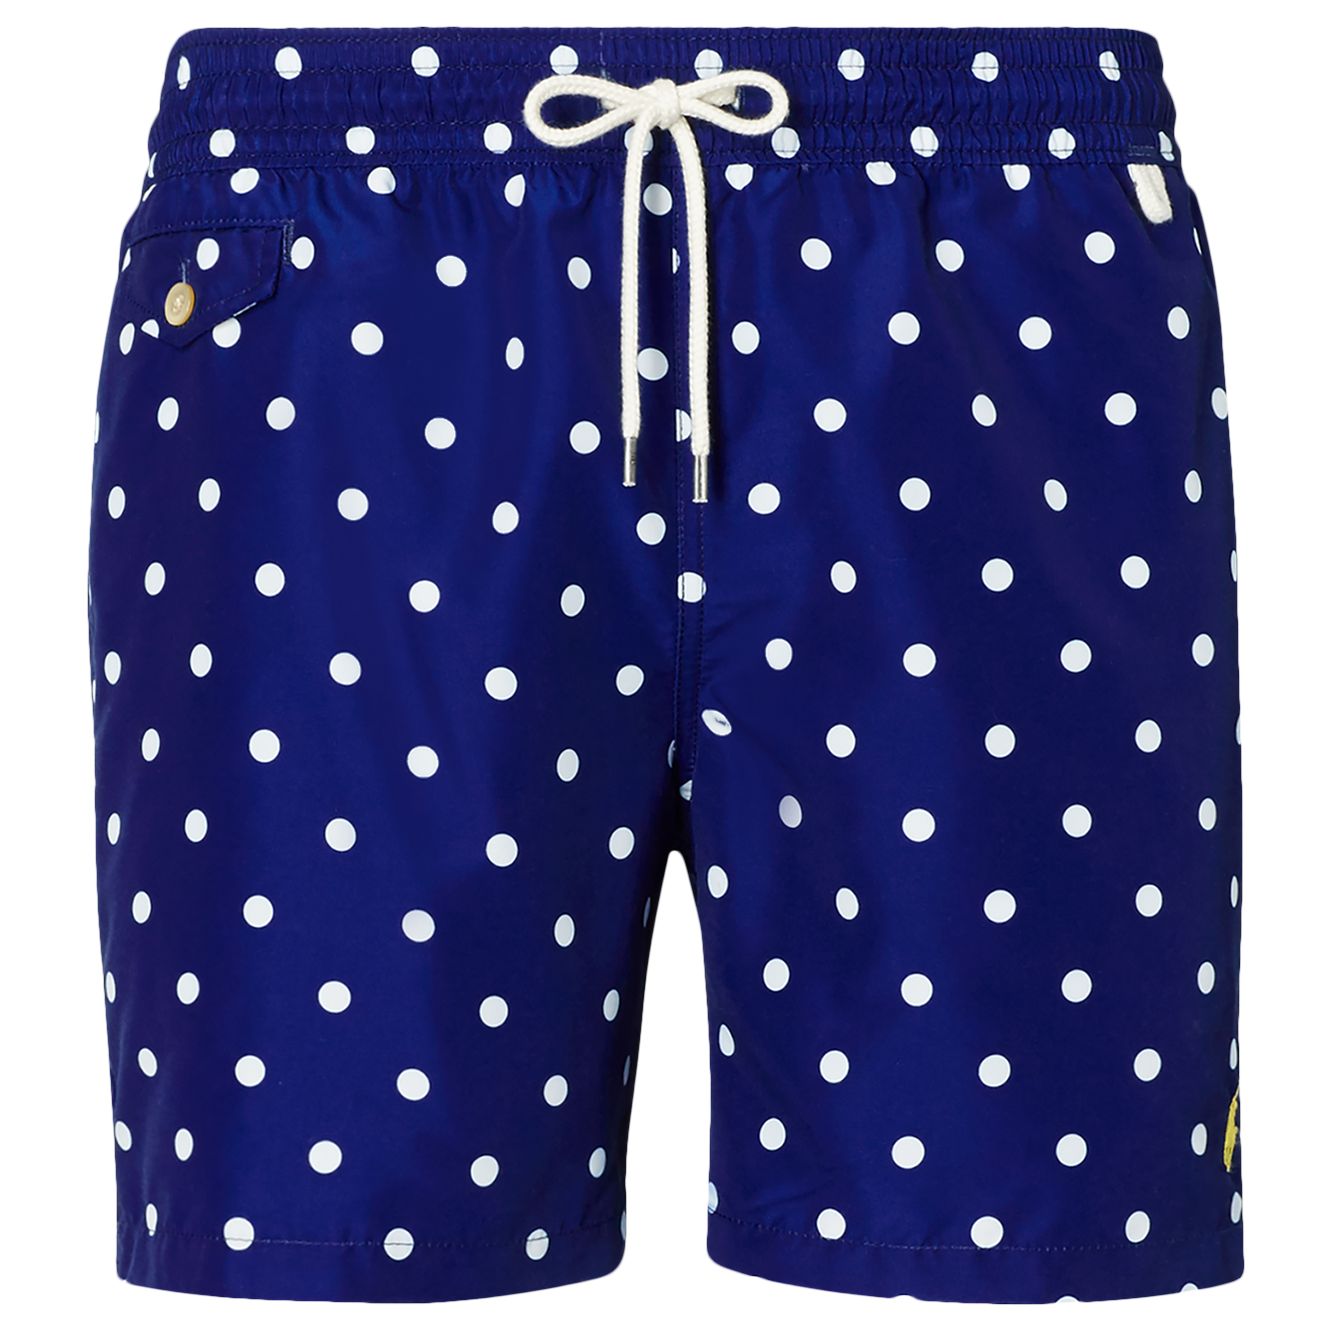 Polo Ralph Lauren Polka Dot Swim Shorts, Blue